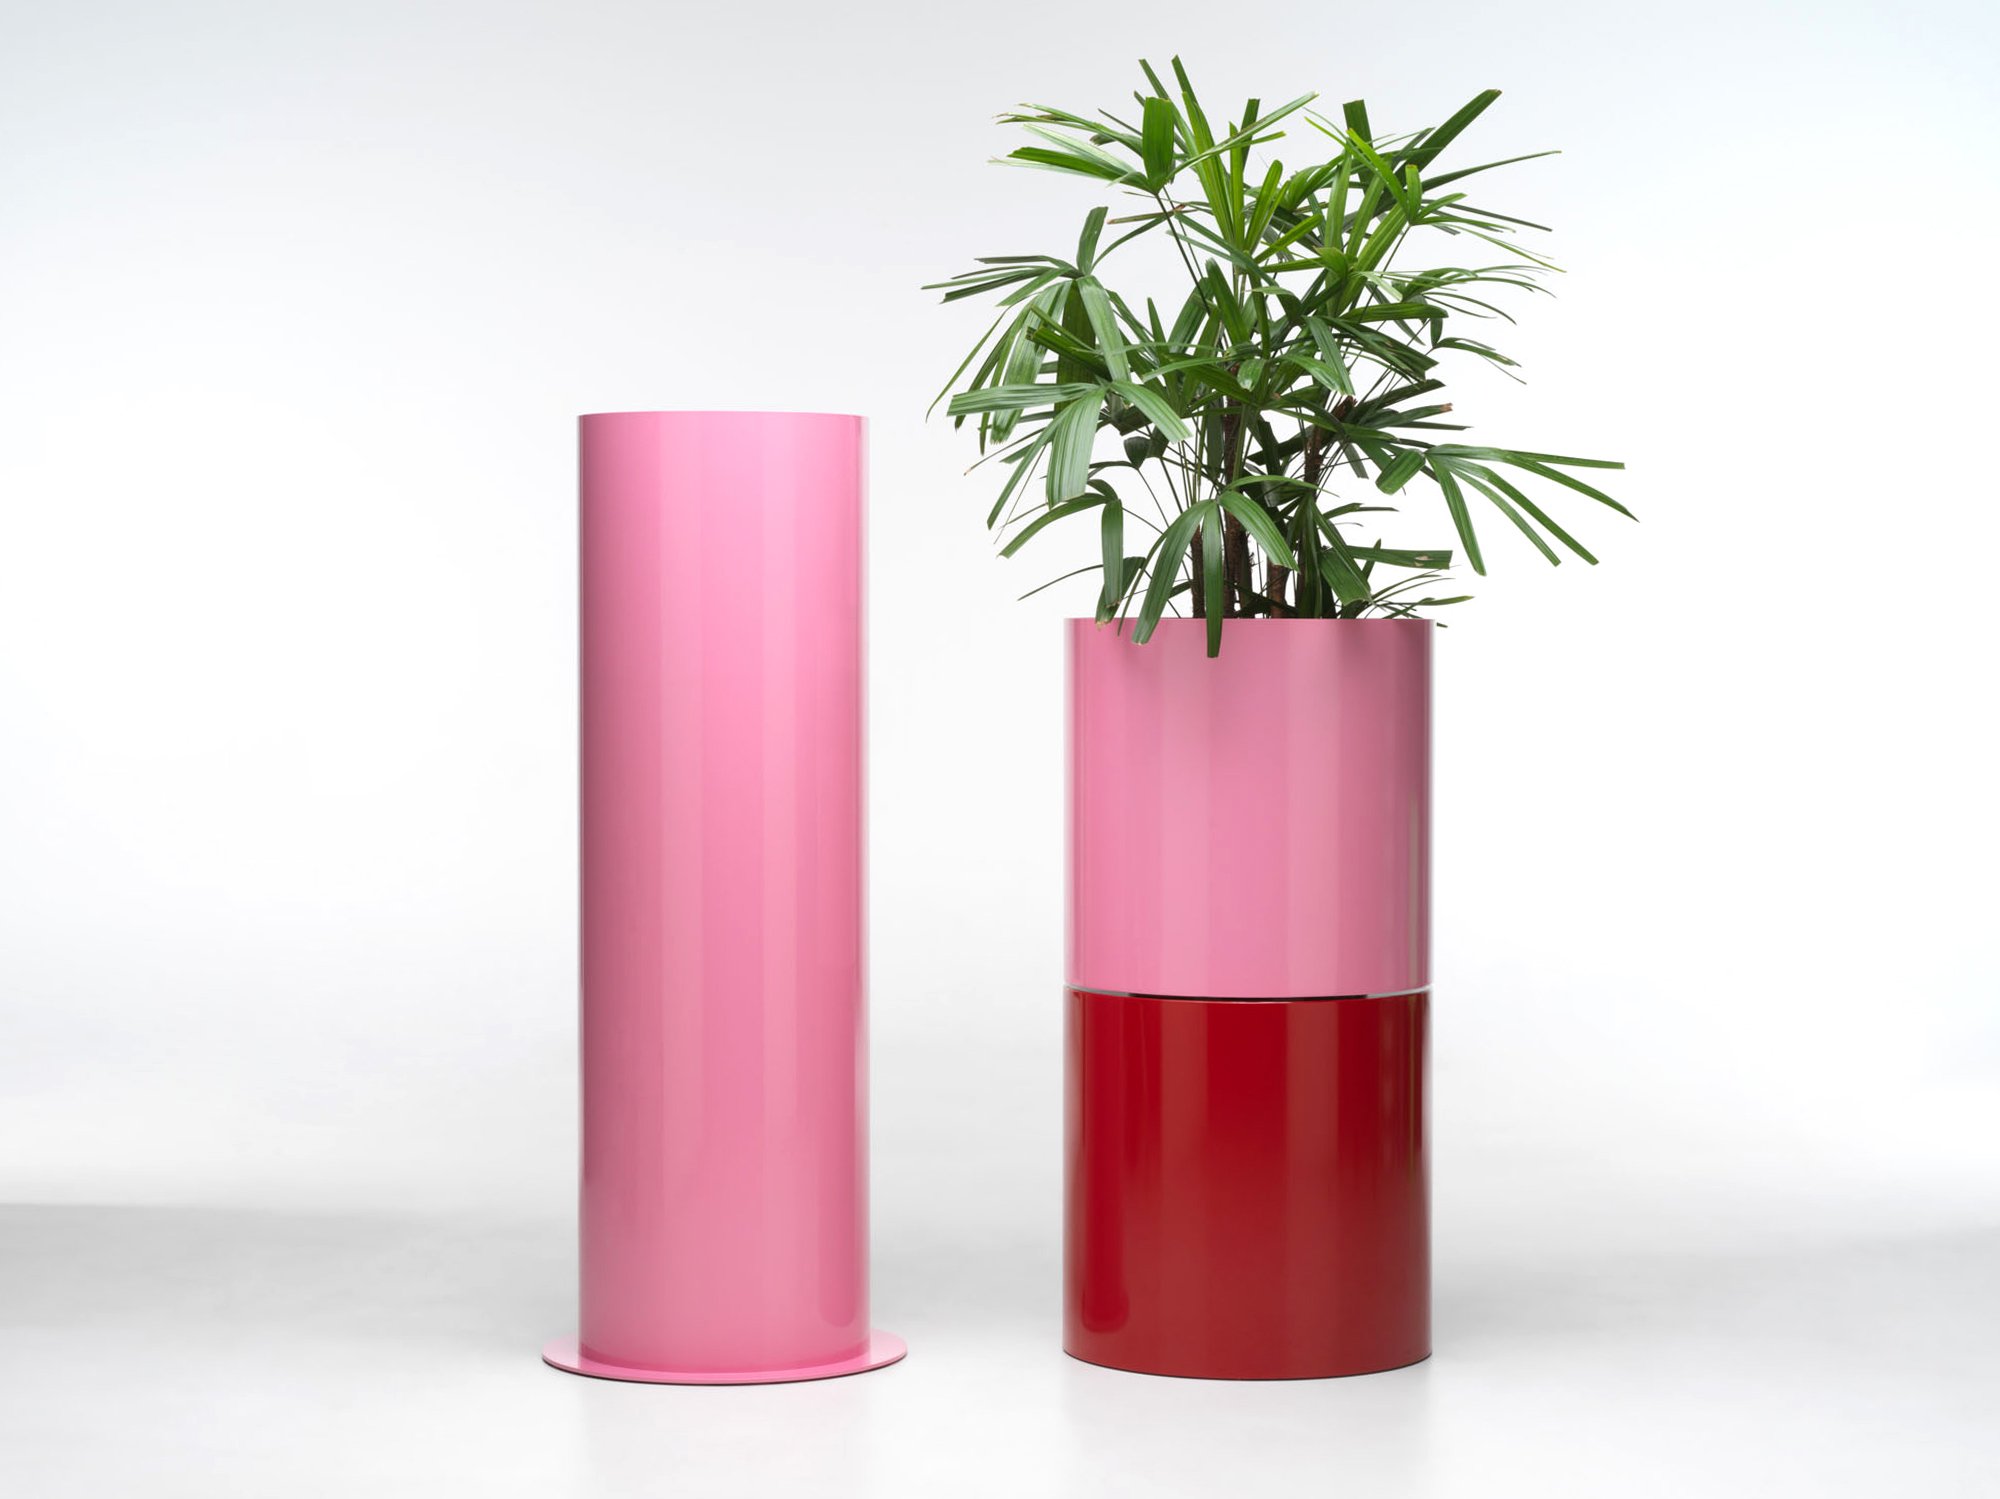 b4-pink-b8-red-pink-planter-studiociao-ciao-XXX.jpg